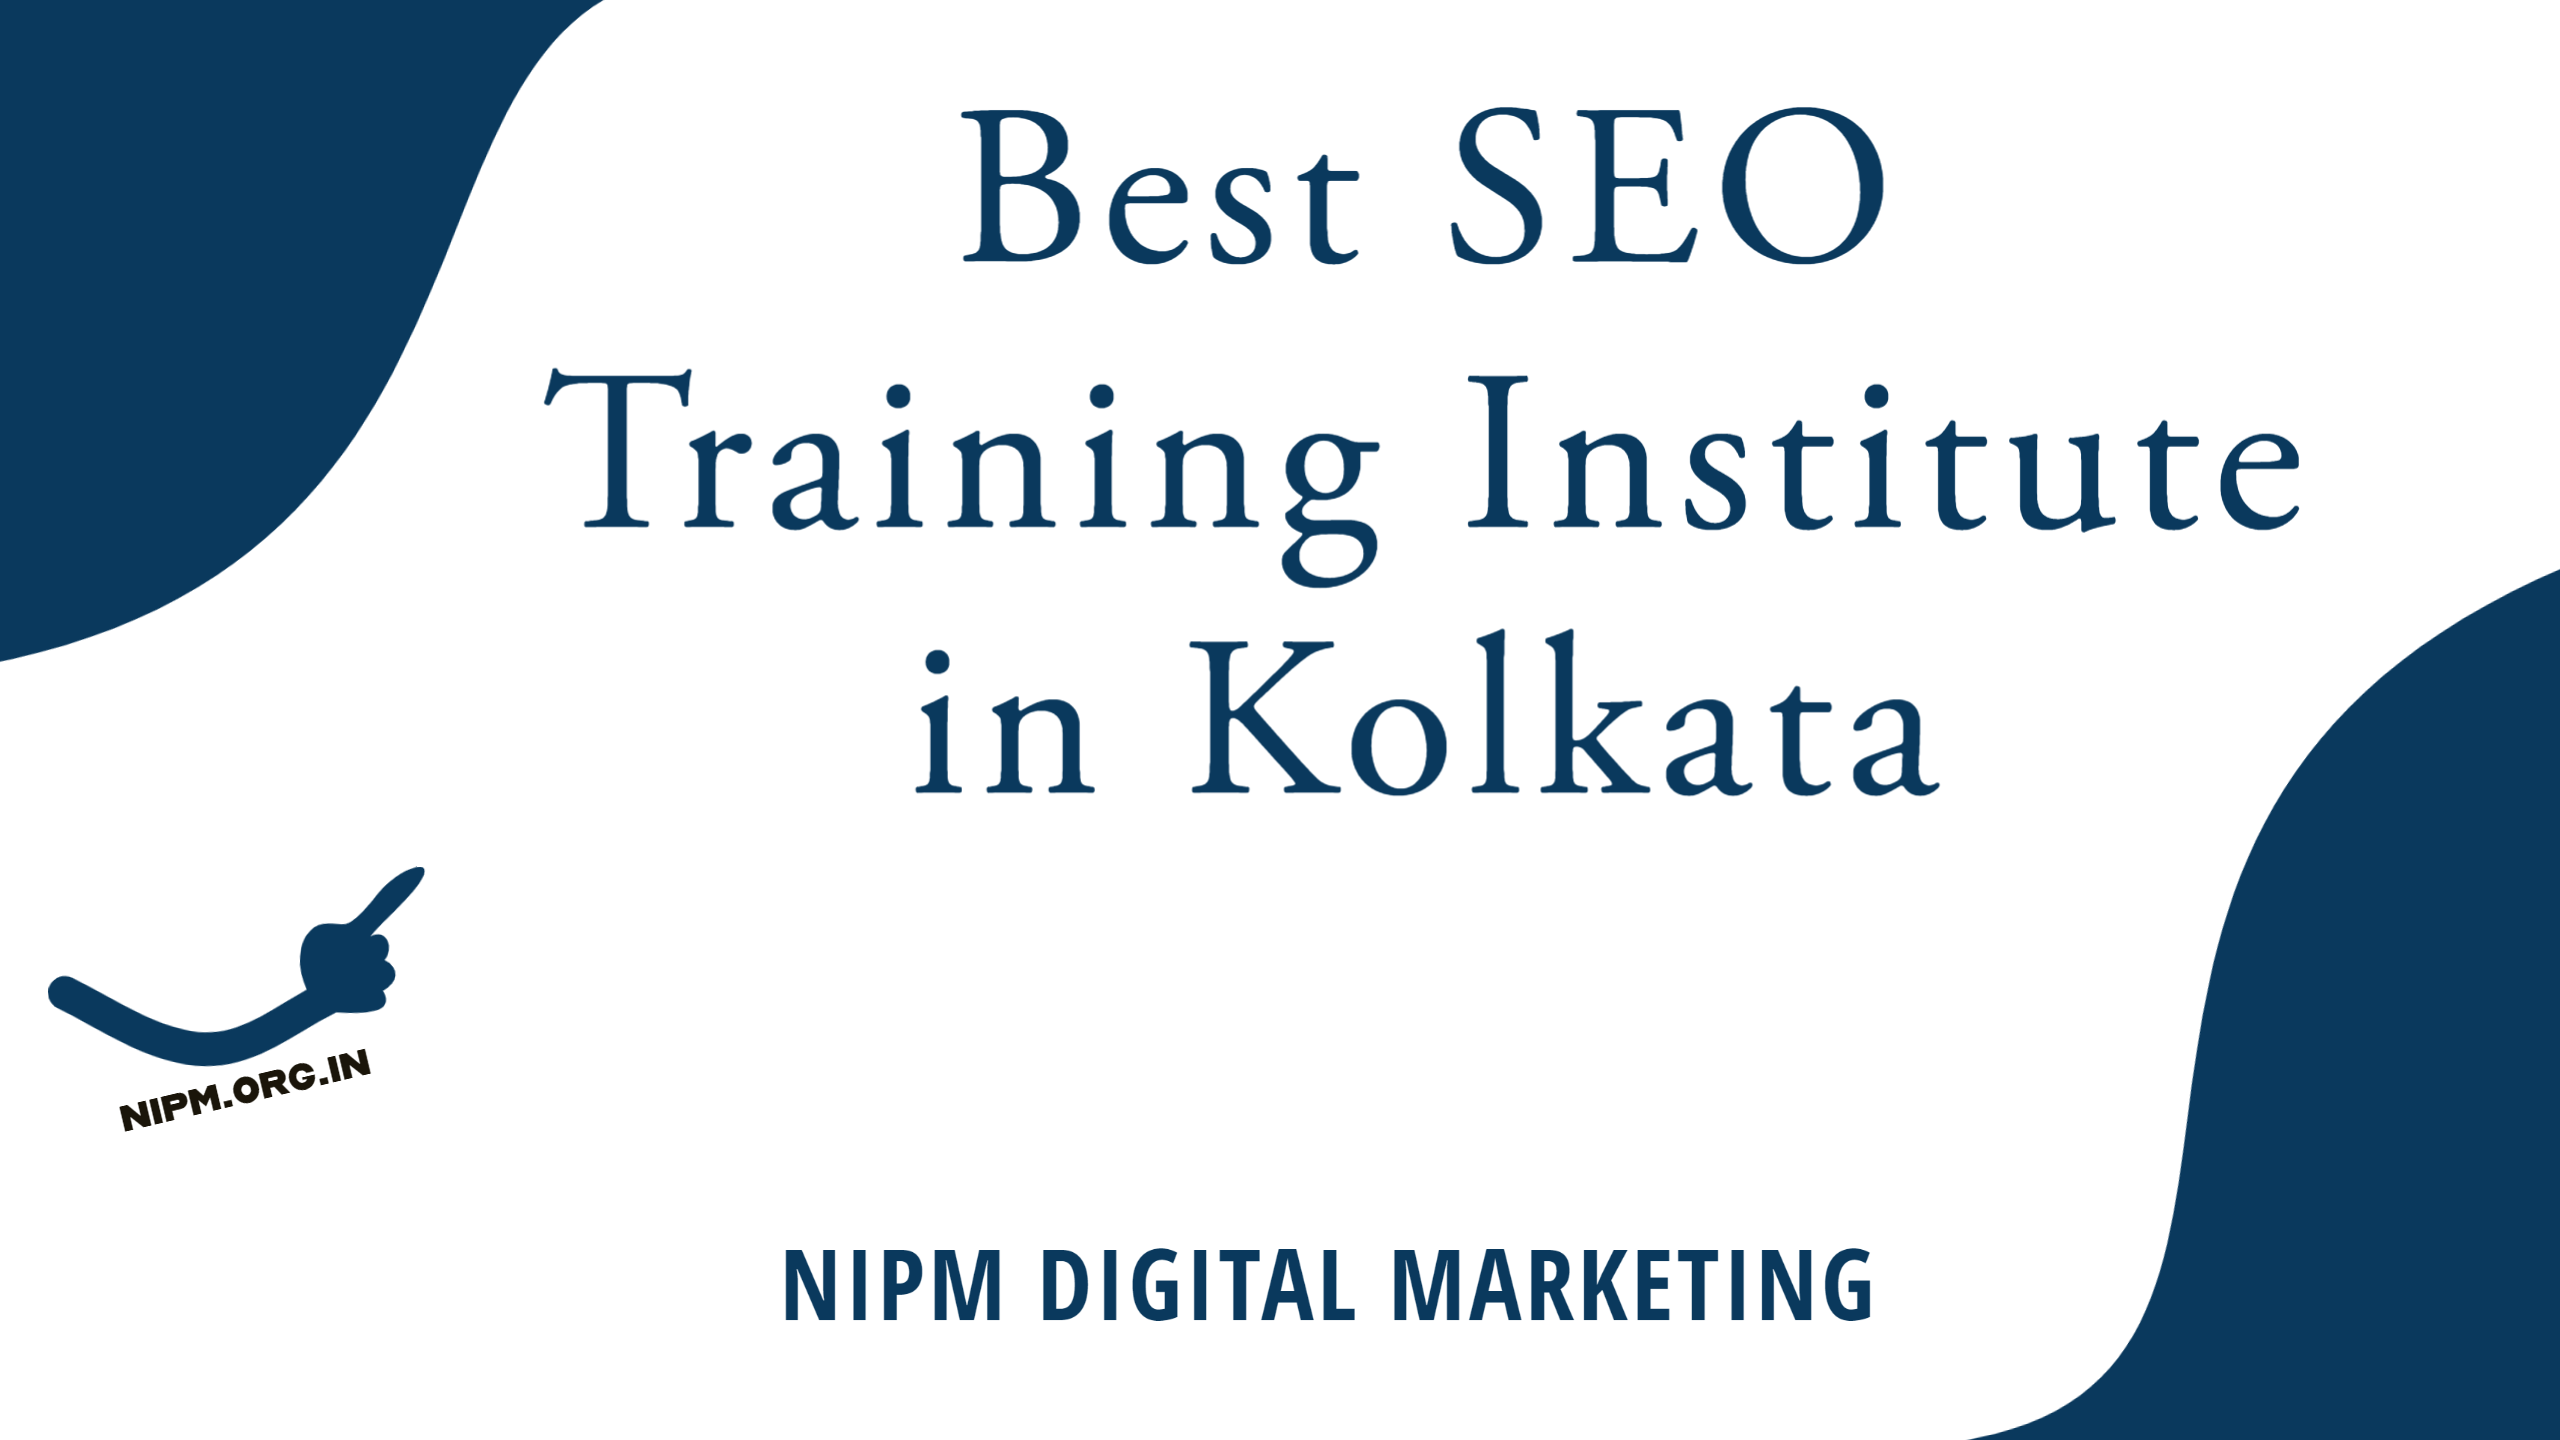 Best SEO Training Institute in Kolkata